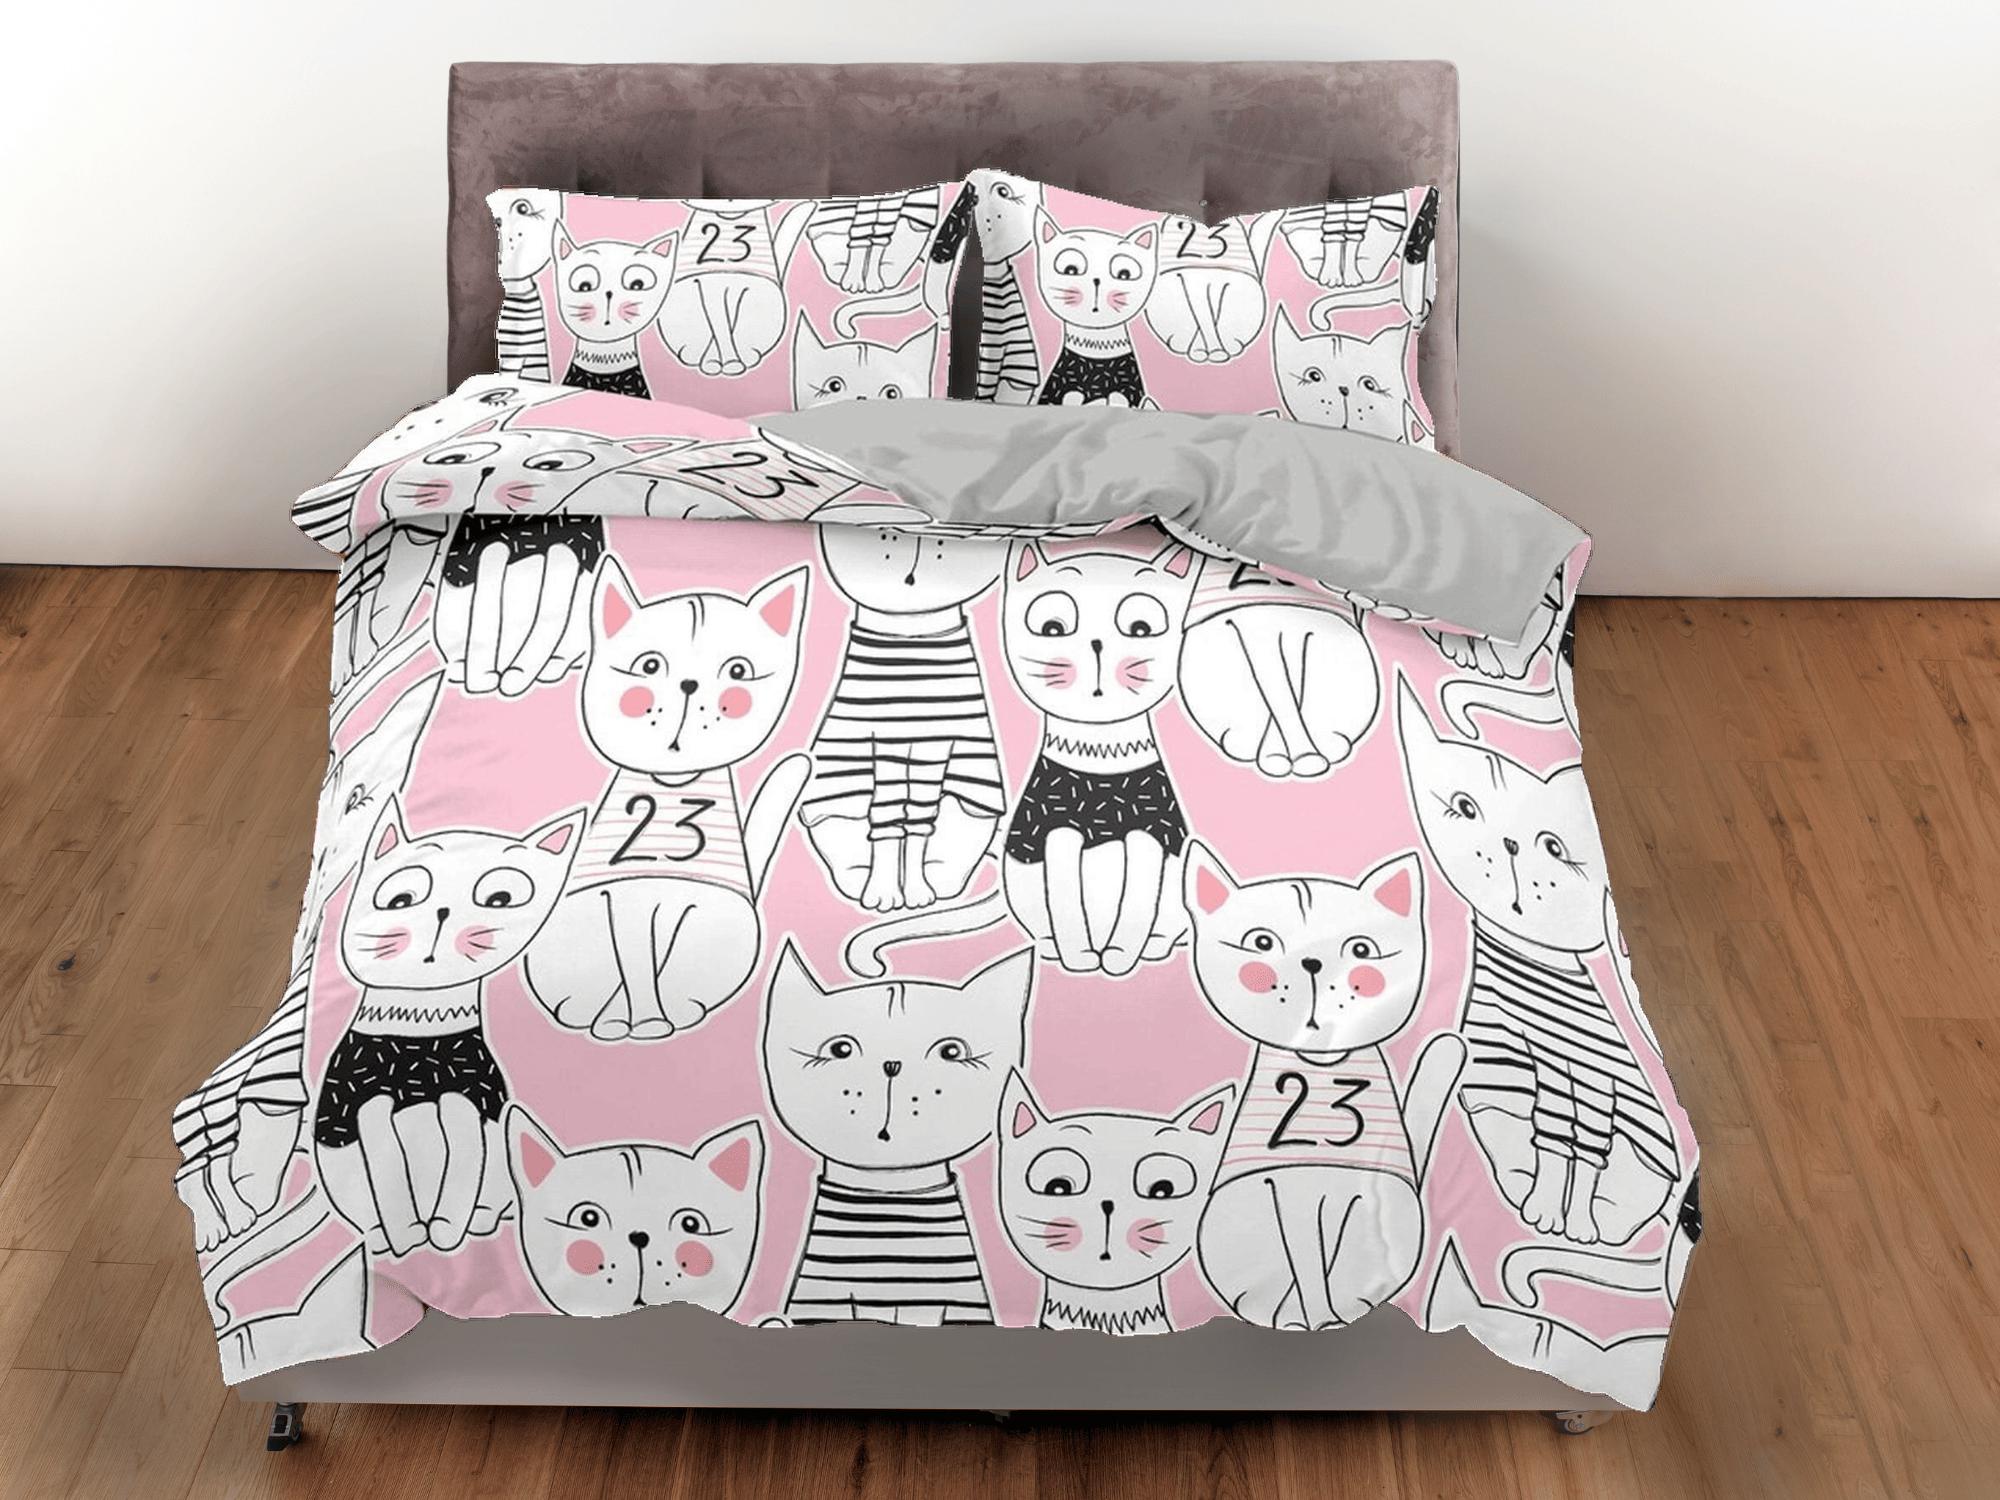 daintyduvet Awkward funny cat bedding, toddler bedding, kids duvet cover set, gift for cat lovers, baby bedding, baby shower gift, pink bedding